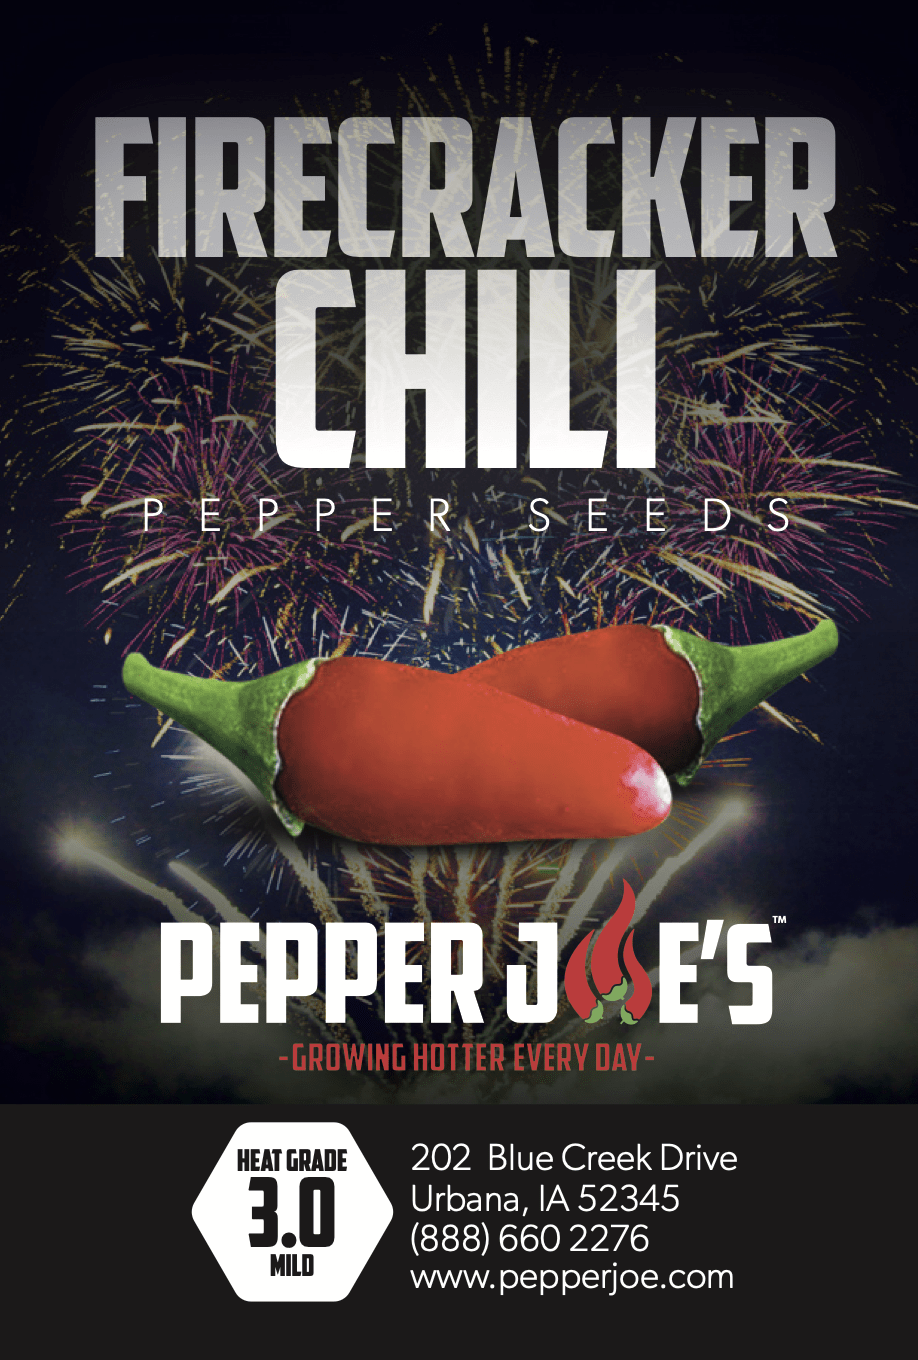 Pepper Joe's Firecracker pepper seeds - seed label